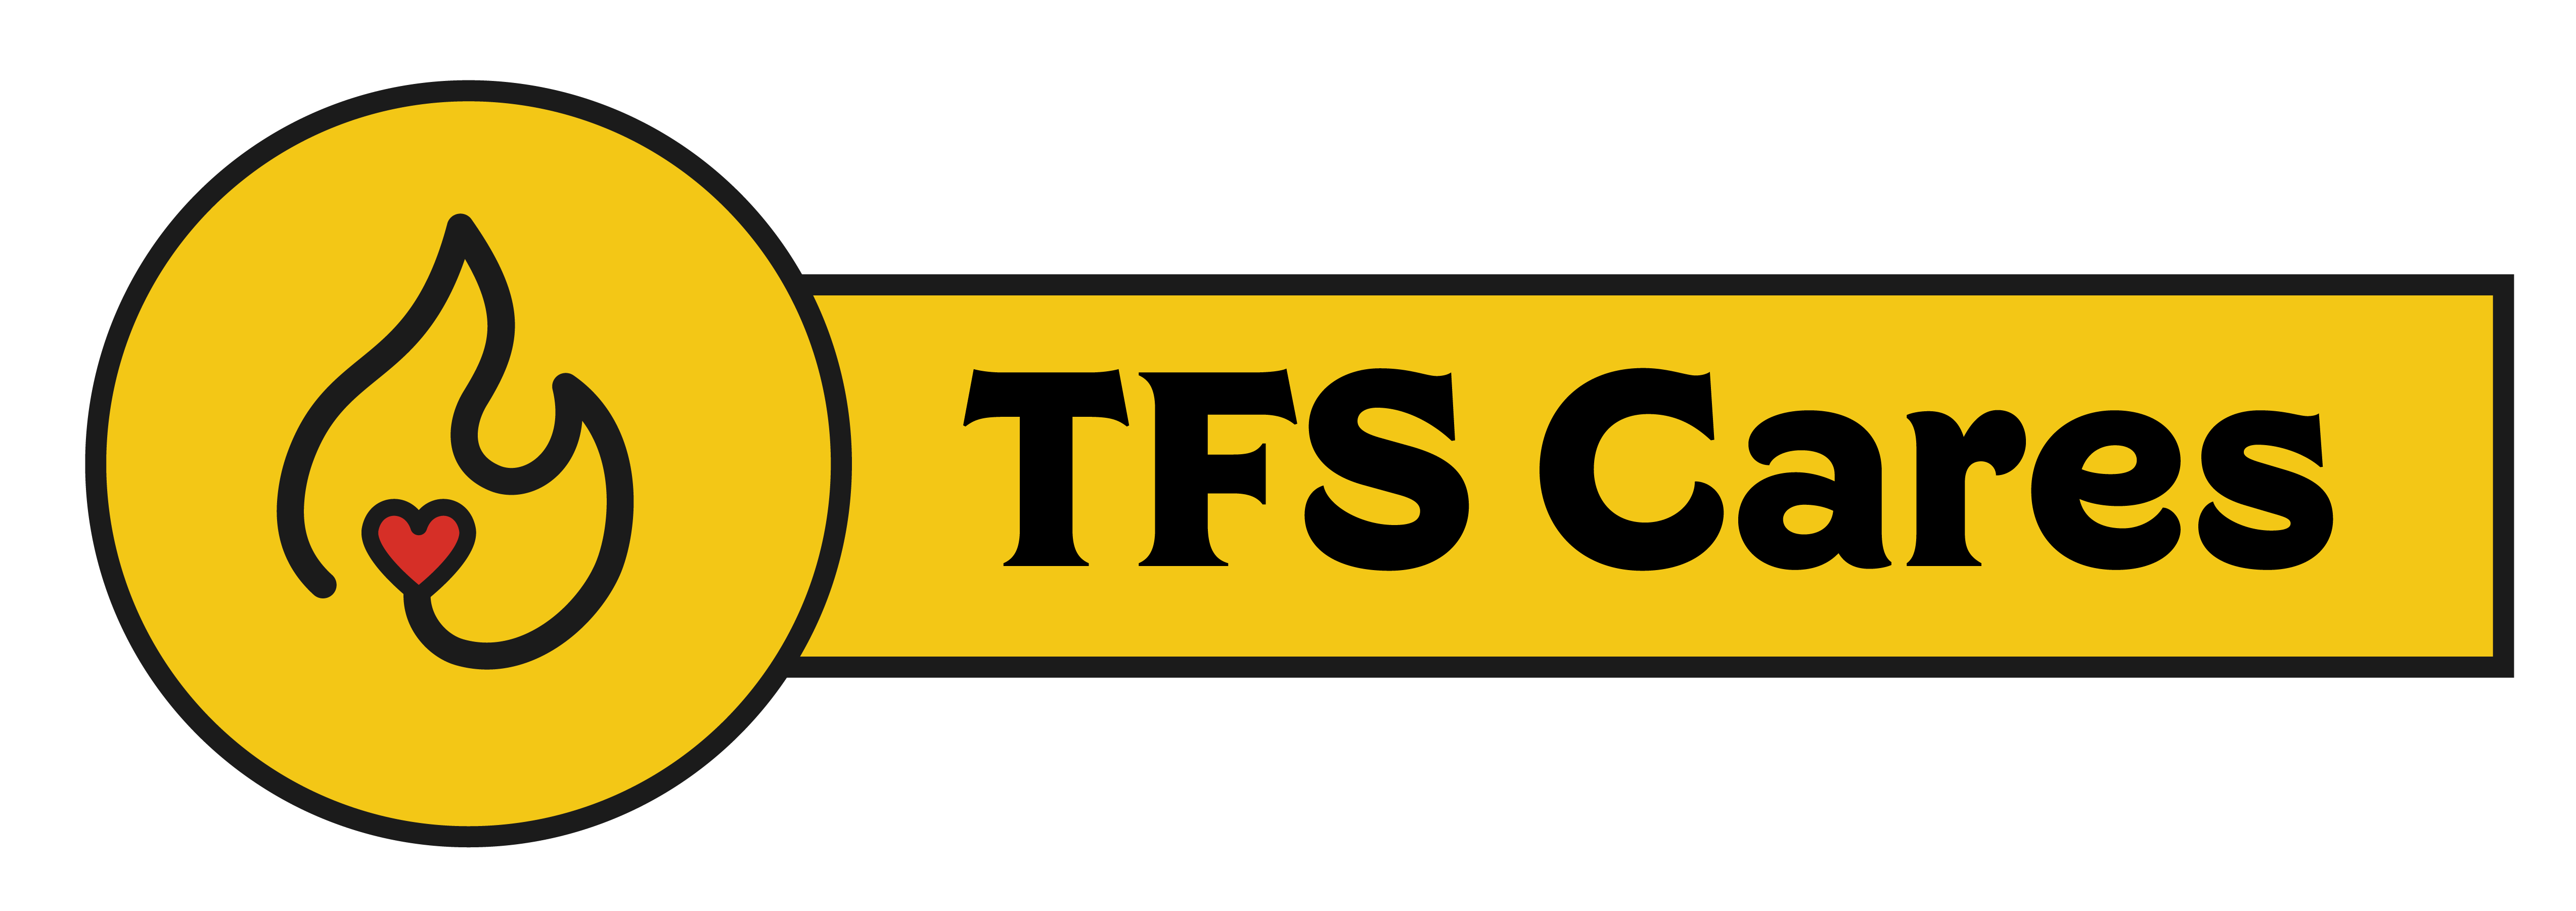 TFS Cares Logo